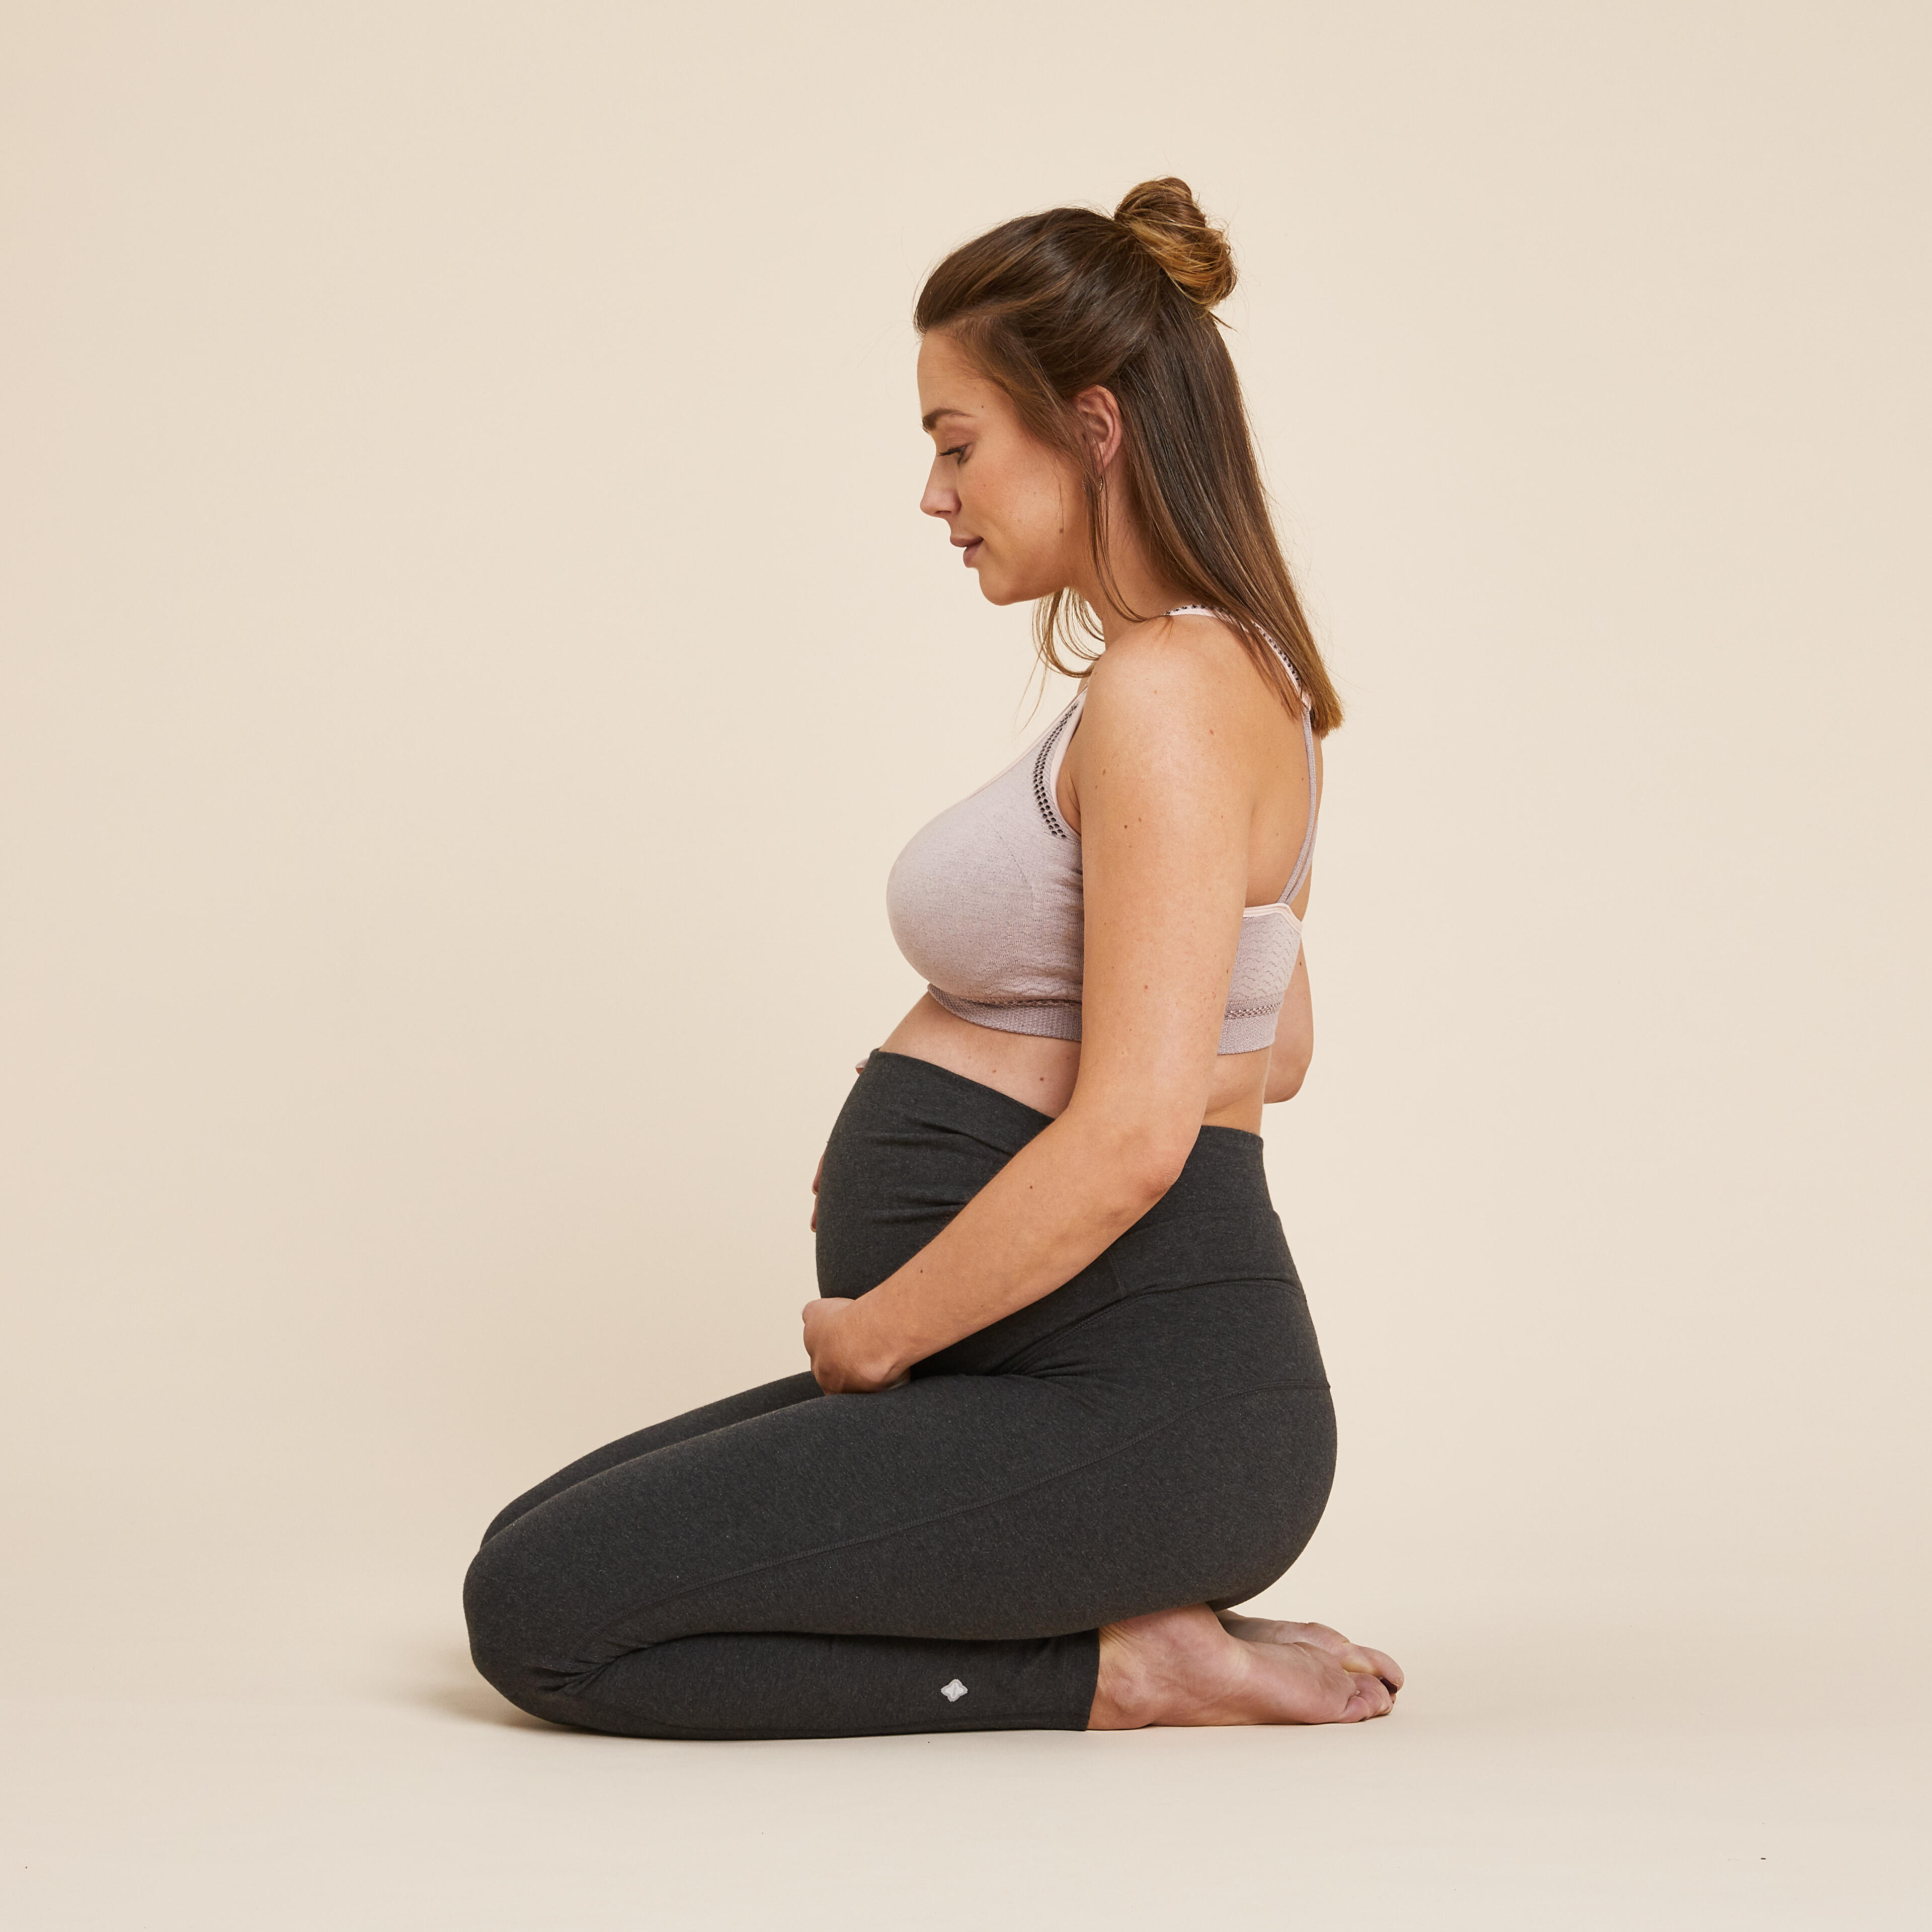 Customer Reviews: Maternity Gentle Yoga Leggings - Black Decathlon